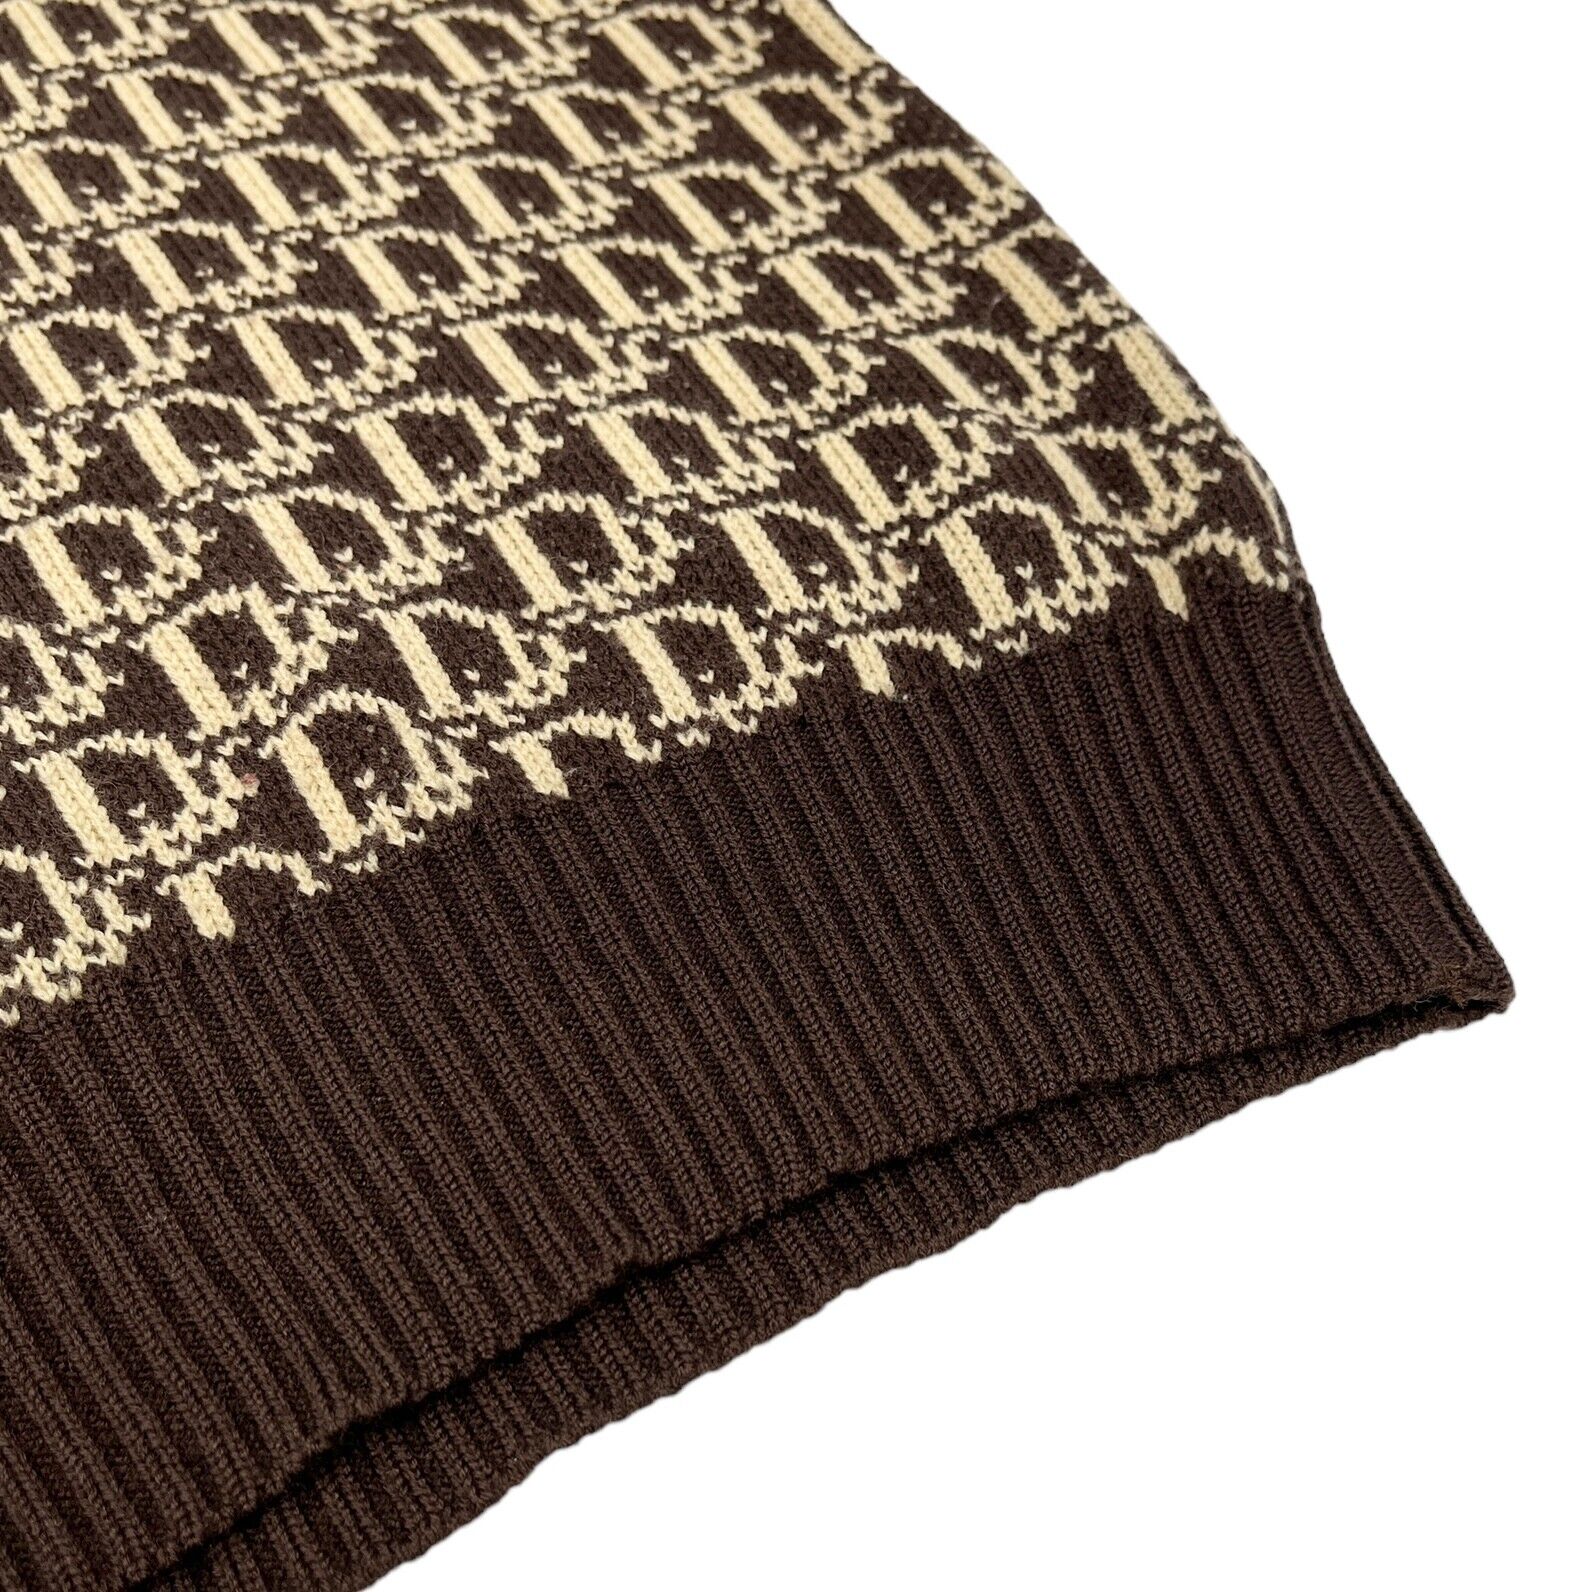 Christian Dior Vintage Trotter Monogram Sweater Top #M Brown Wool Rank AB+